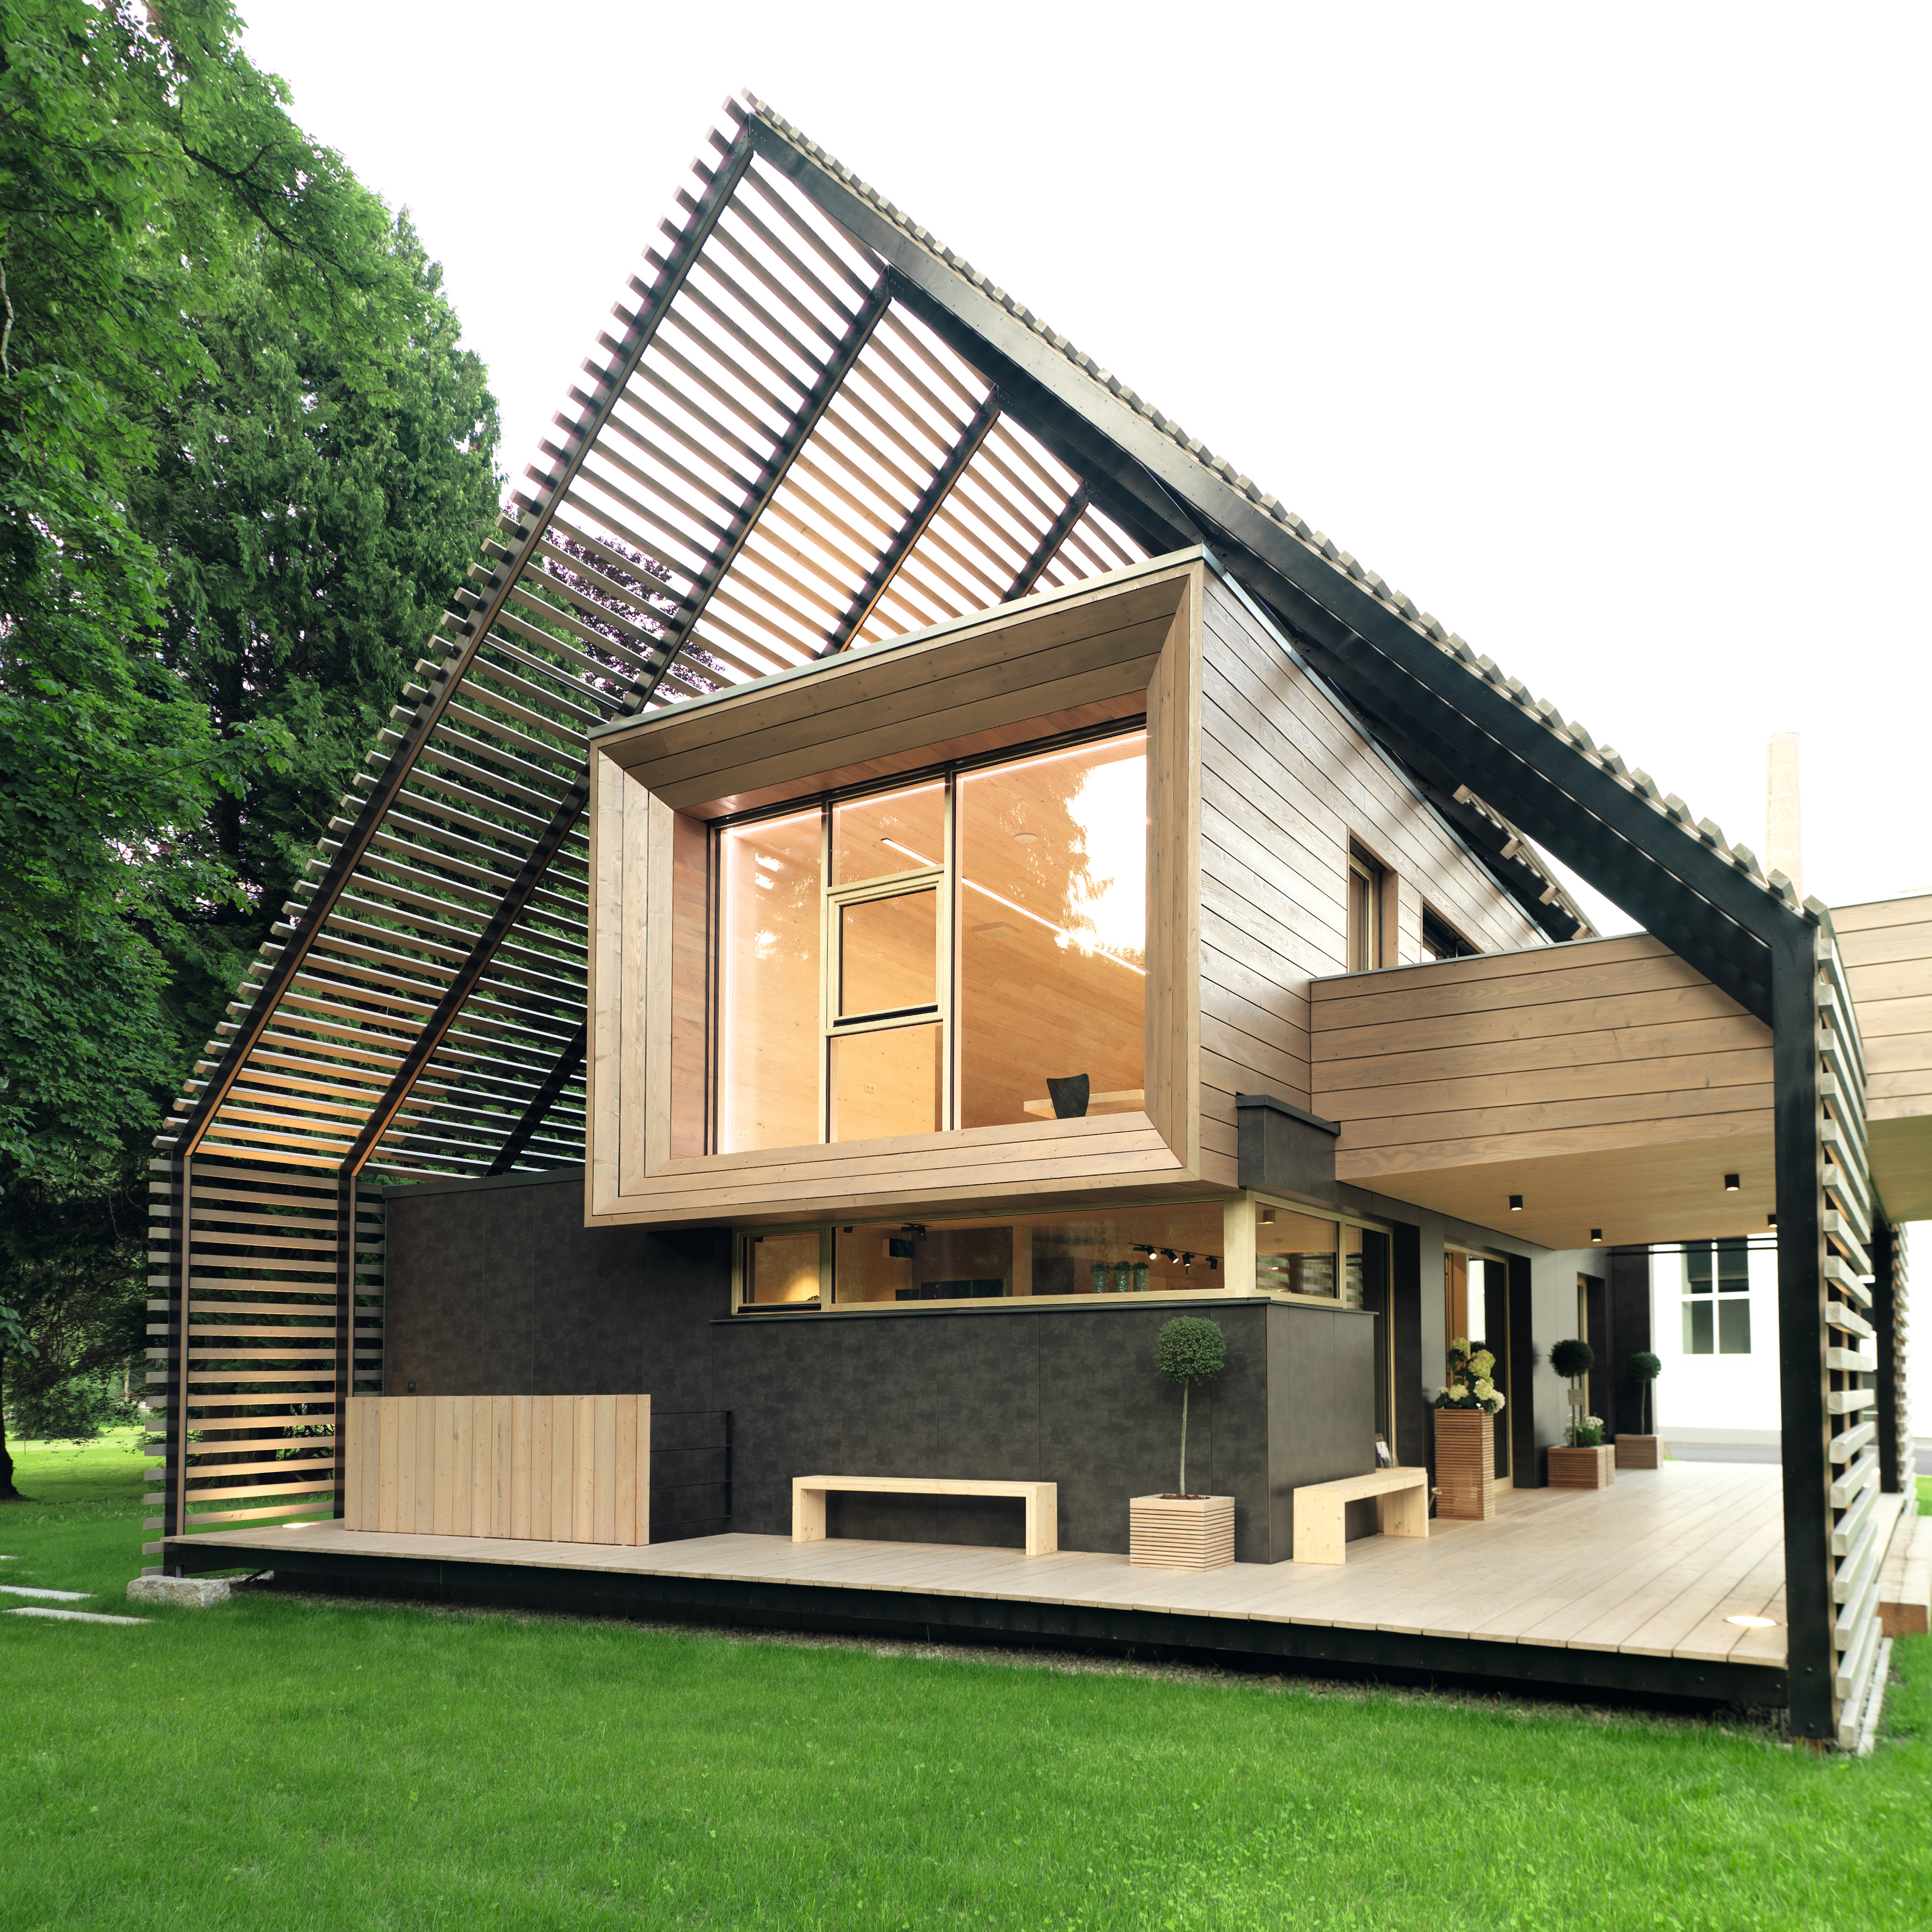 Plus energy house con pannelli OSB 4 TOP e DHF © Auftragsfoto.at/Stefan Sappert